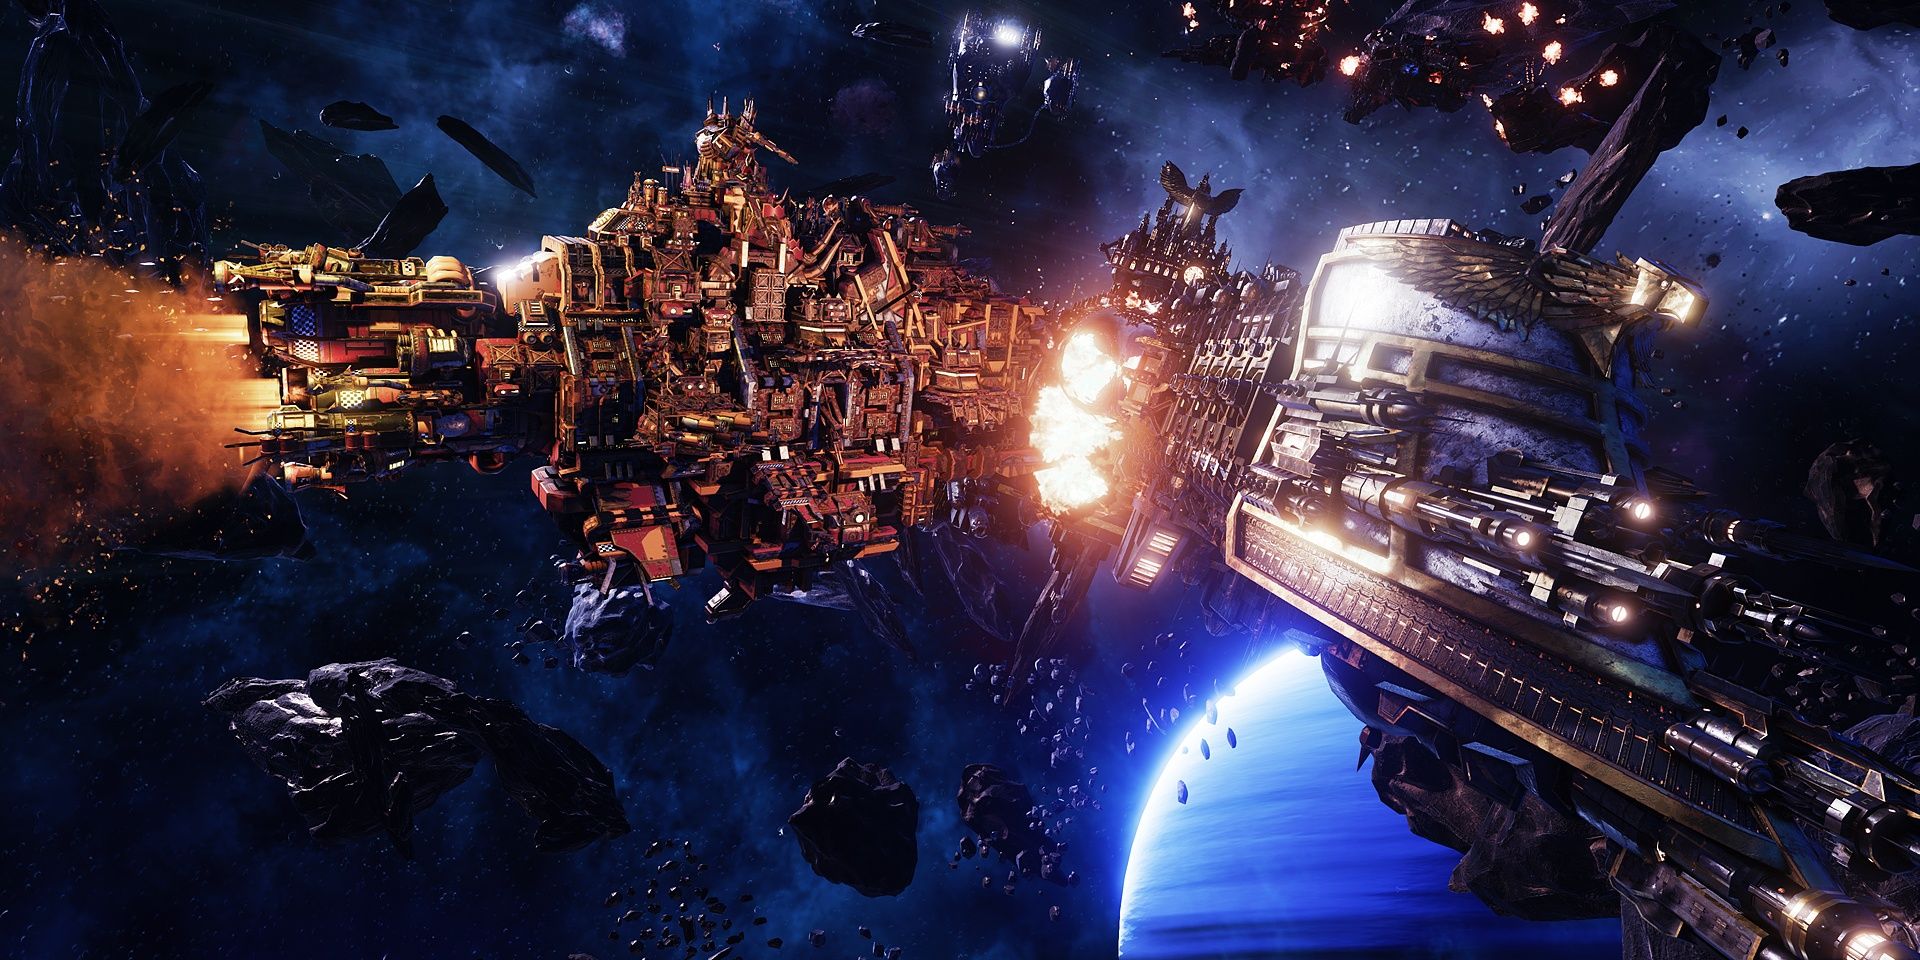 Battlefleet Gothic Armada large ship exploding in space